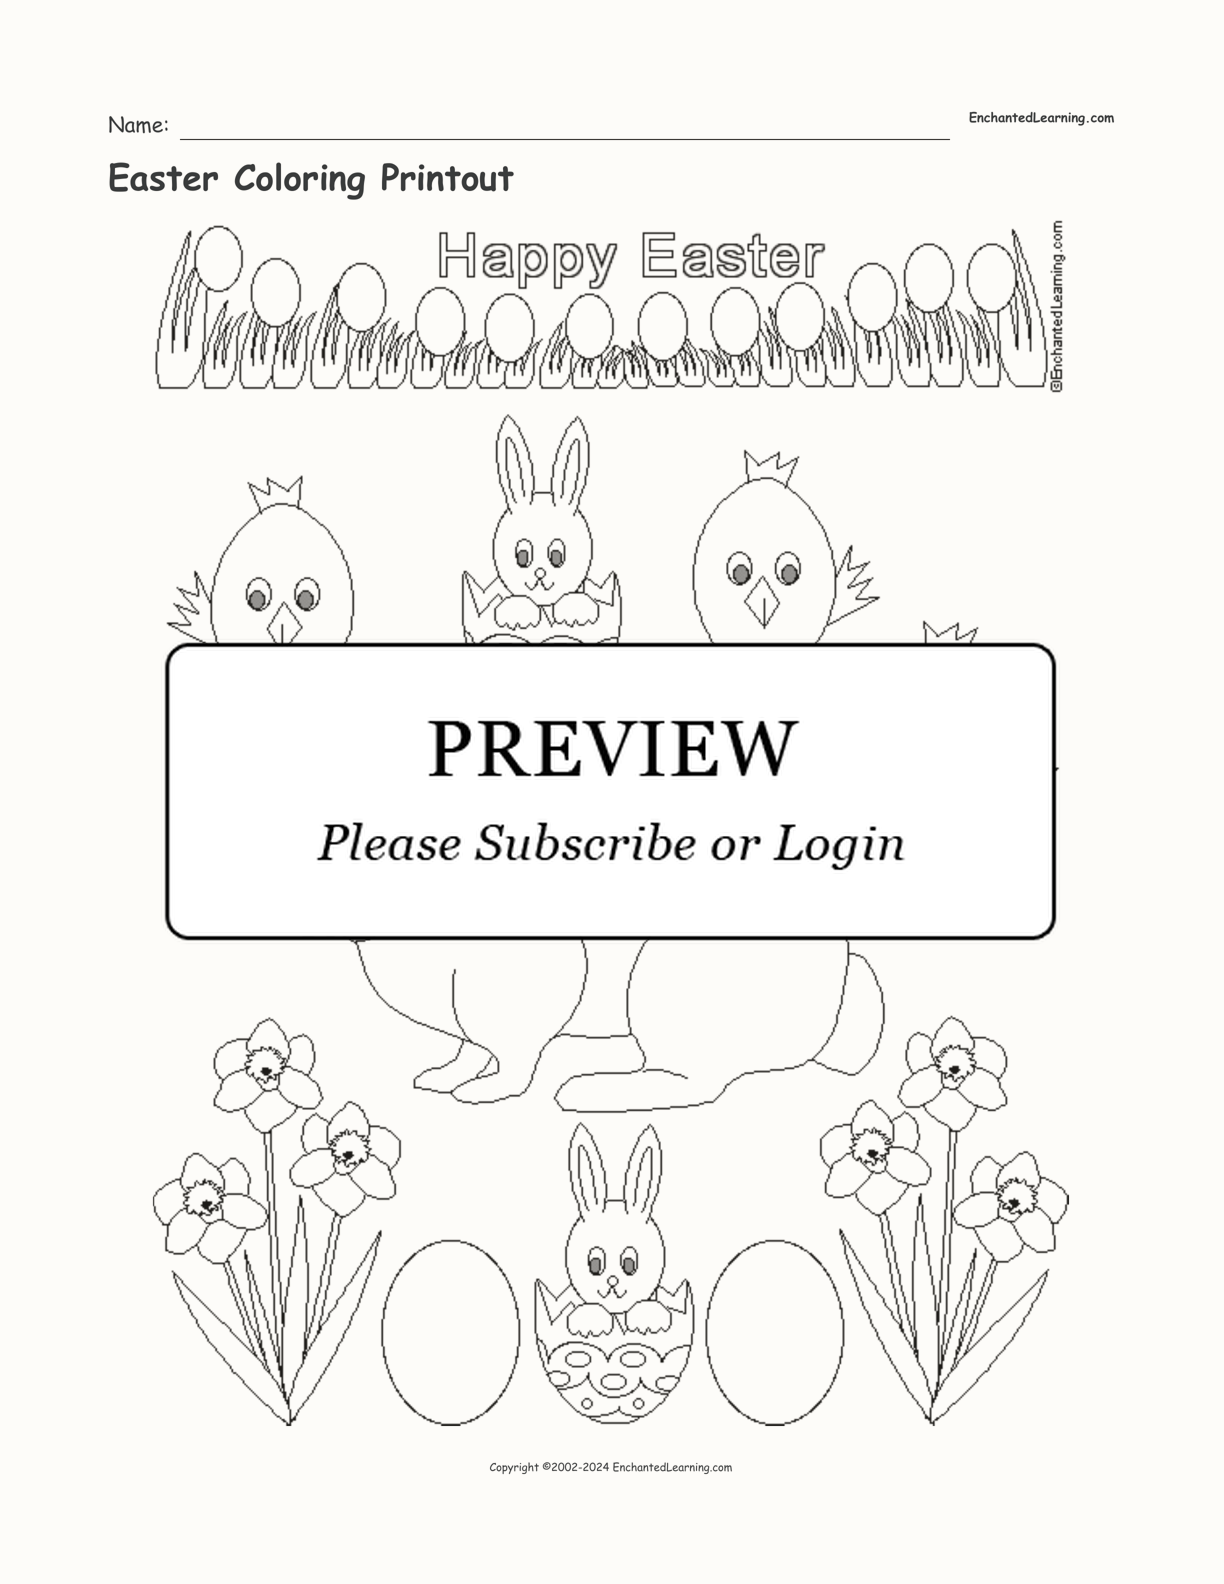 Easter Coloring Printout interactive printout page 1